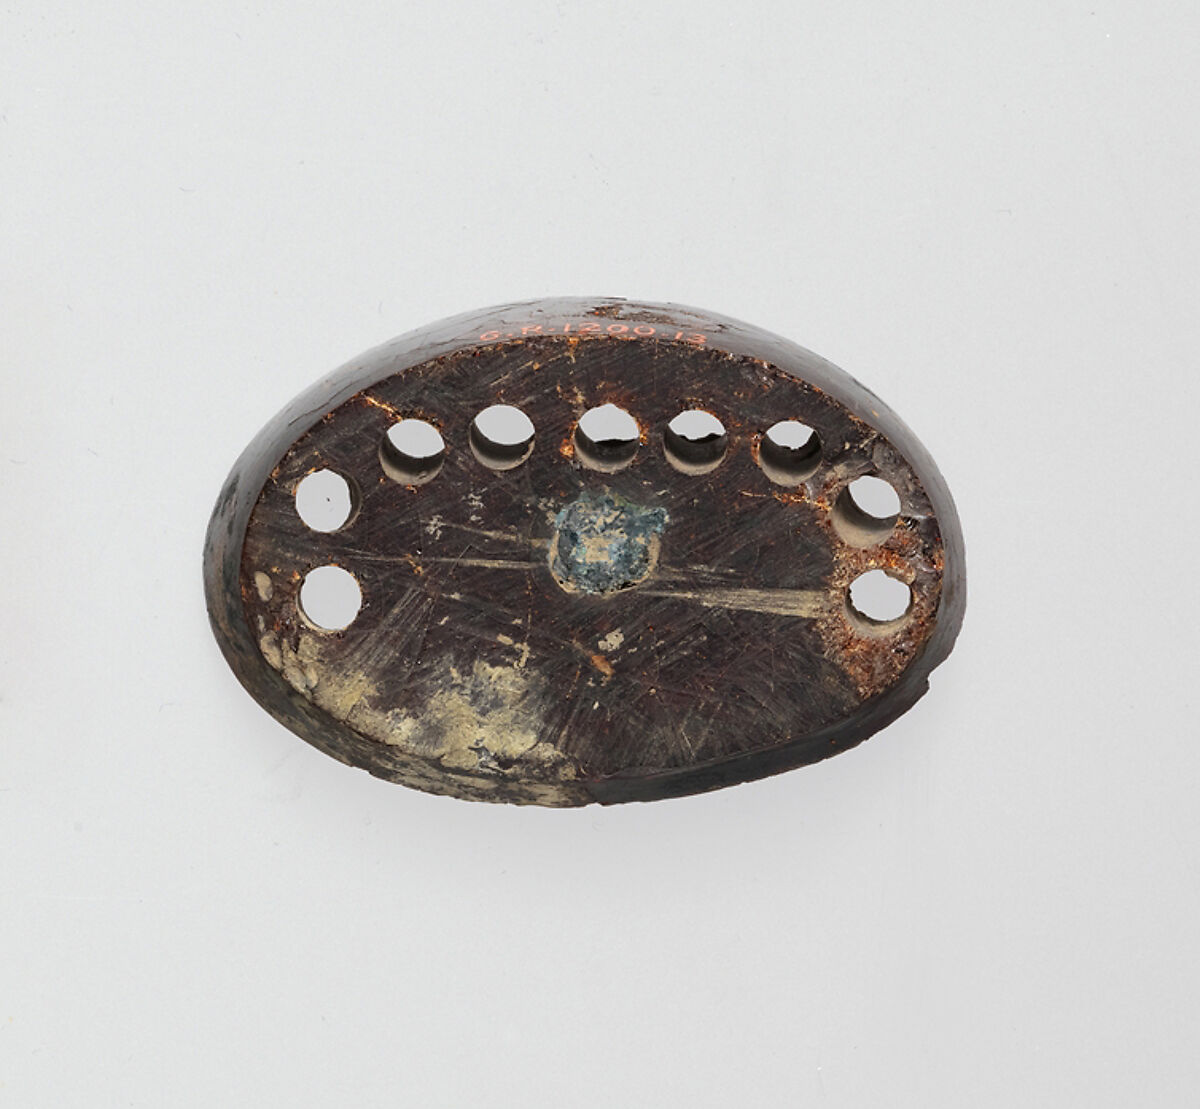 Segment from a bronze fibula (safety pin), Amber, bronze, Etruscan 